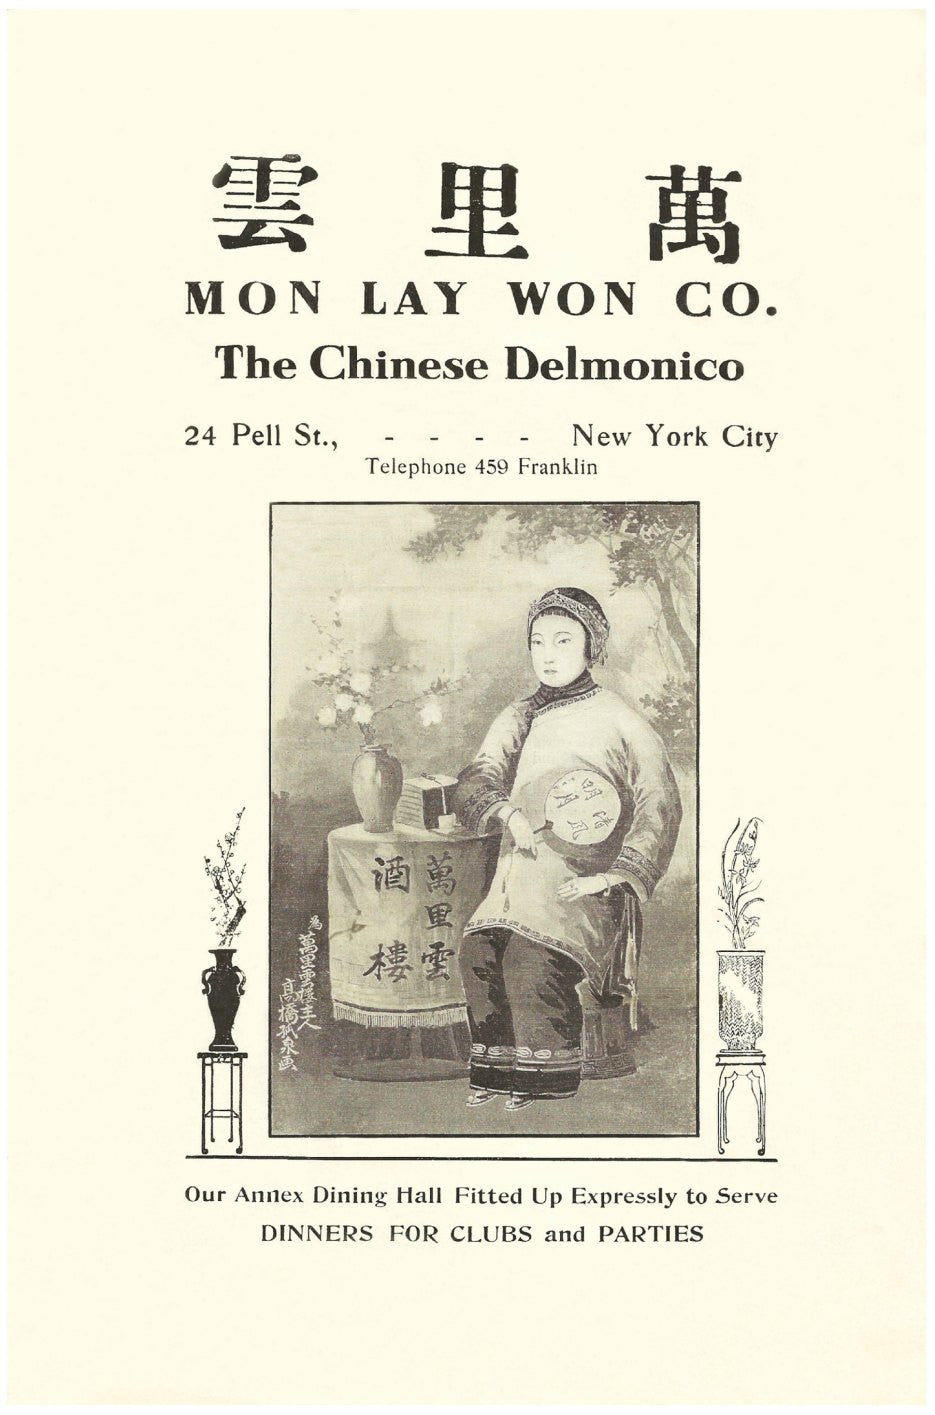 Mon Lay Won Co, New York, 1910 Menu Art